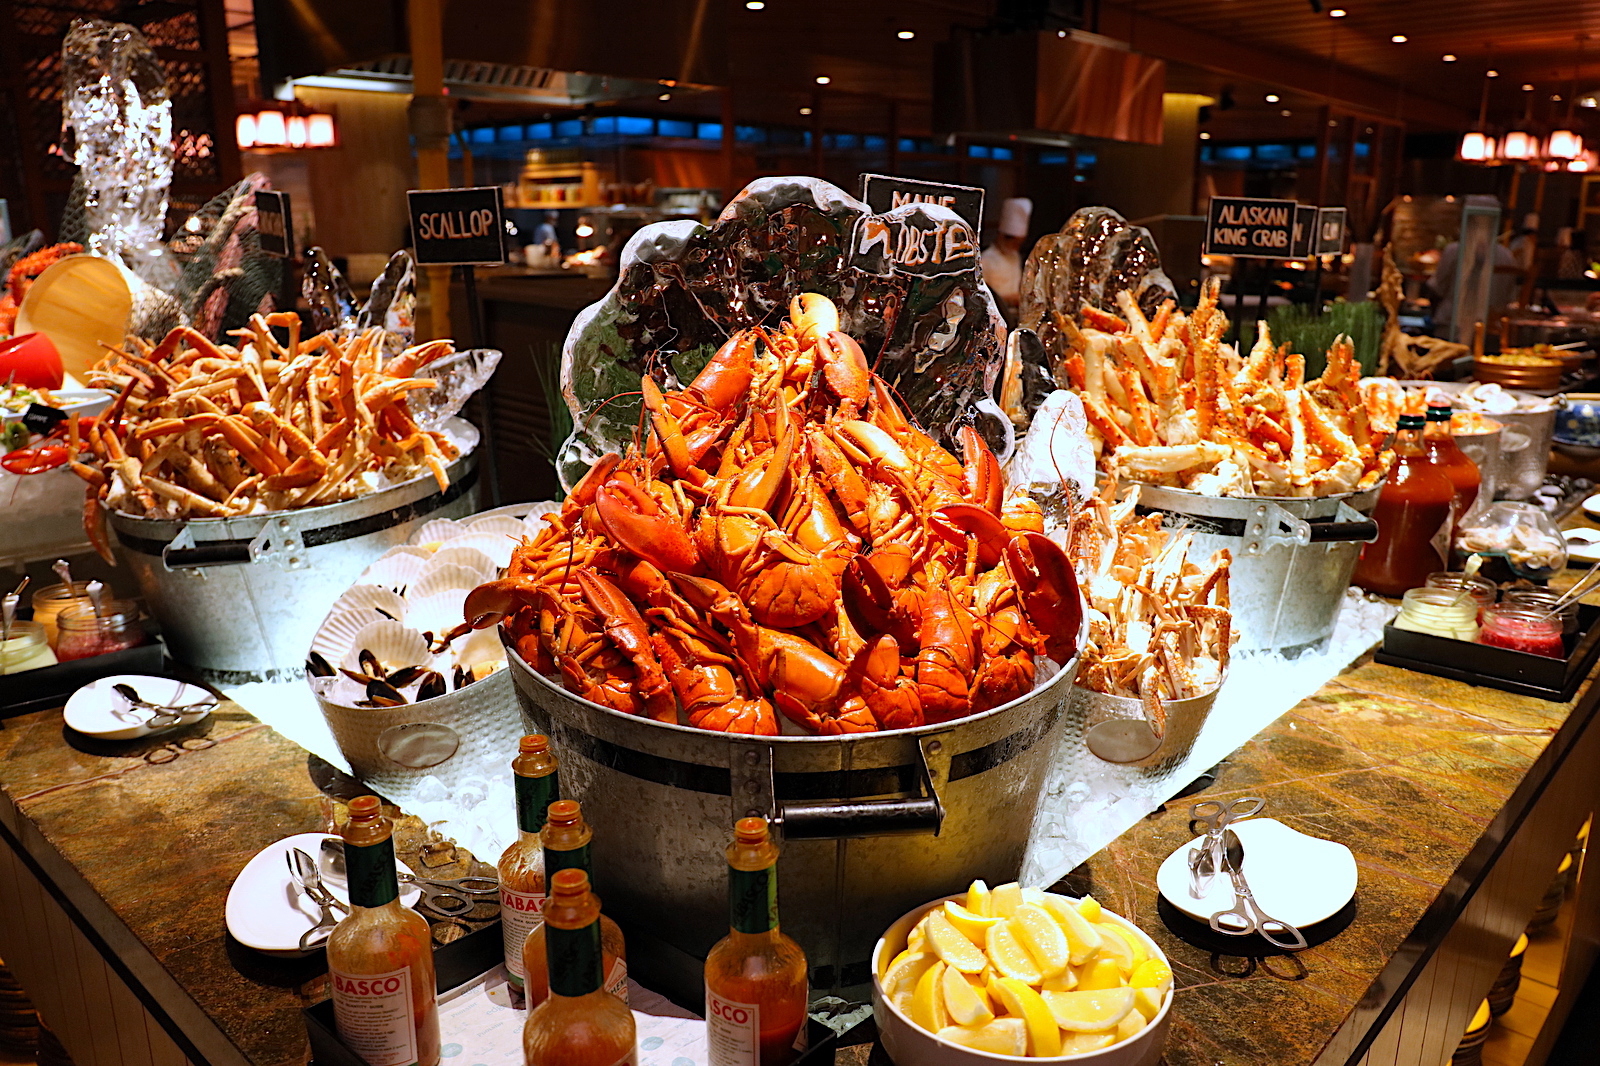 Seafood buffet restaurant in corpus christi info | richard's blog